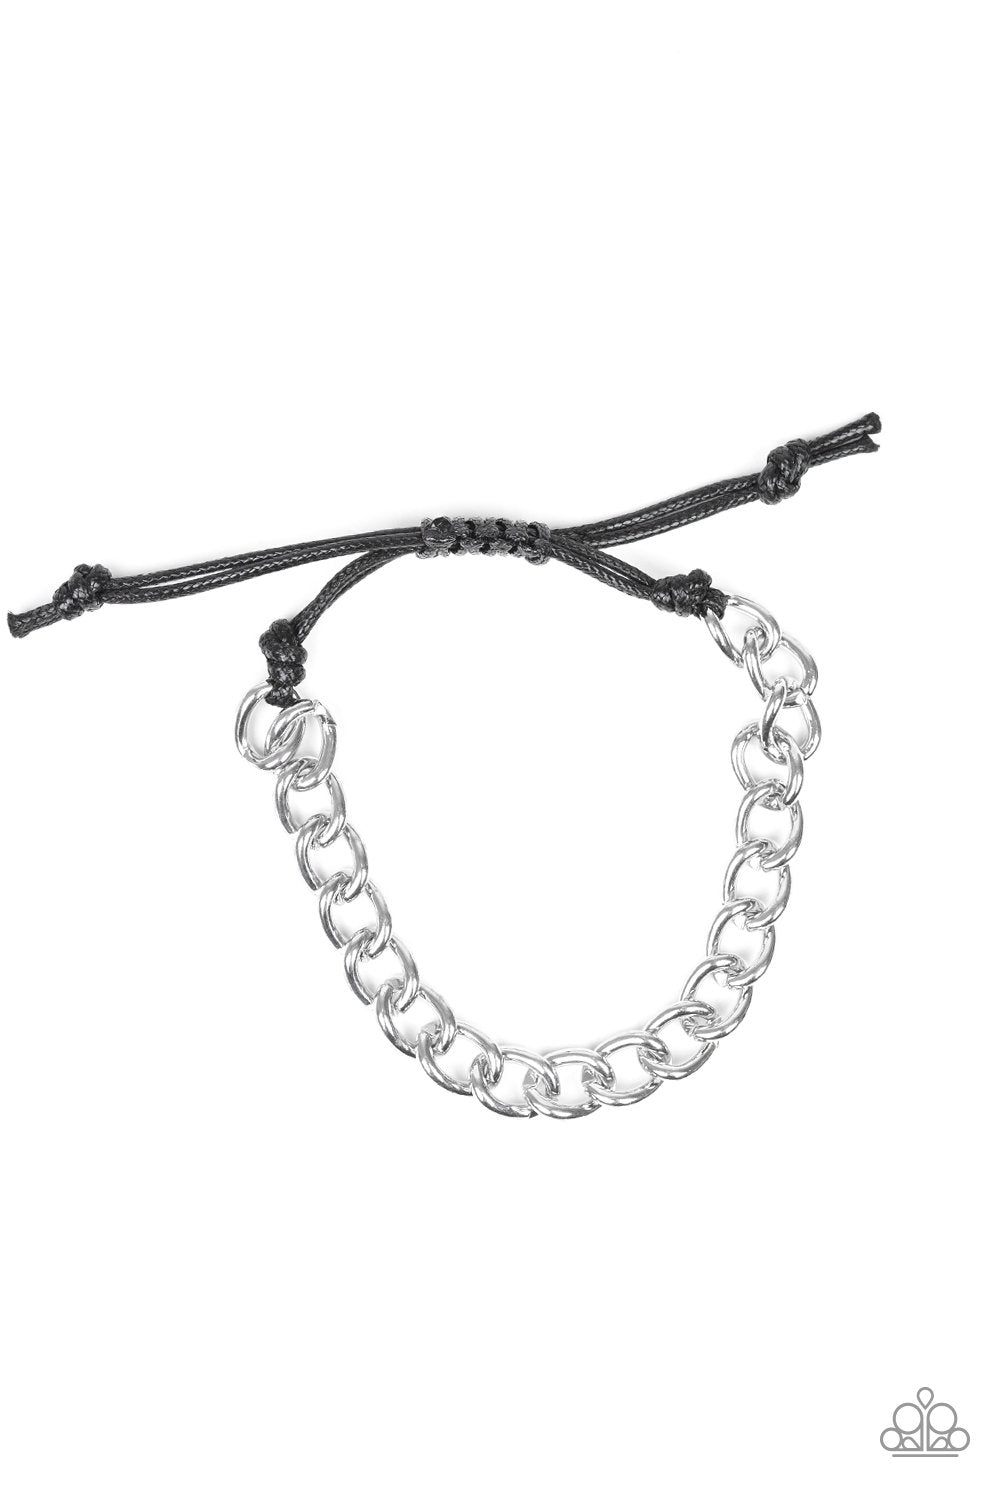 Sideline Silver Urban Sliding Knot Bracelet - Paparazzi Accessories-CarasShop.com - $5 Jewelry by Cara Jewels